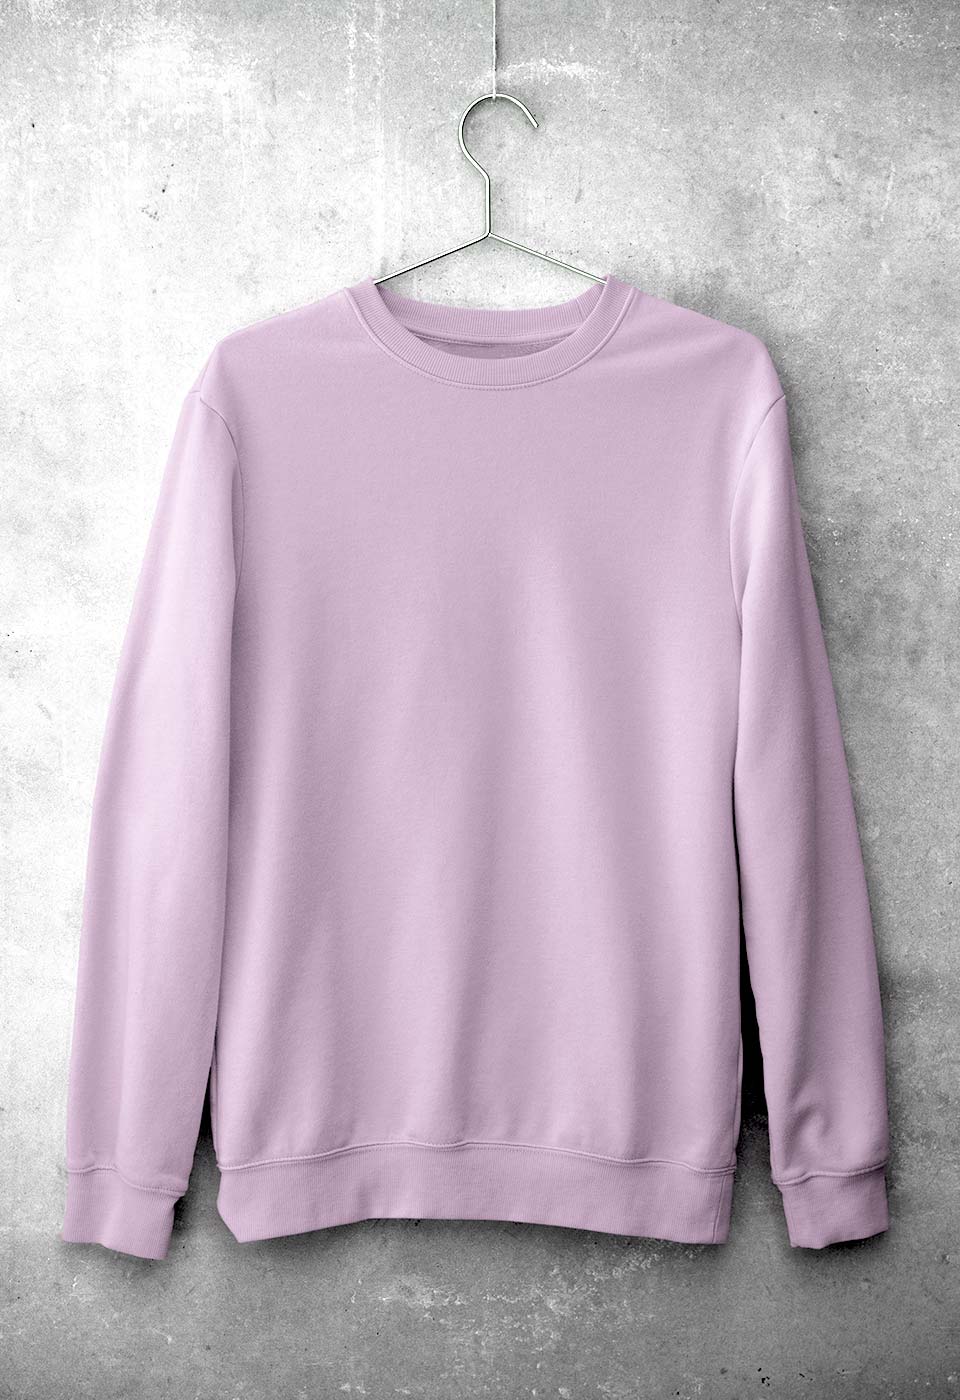 Plain Light Pink Unisex Sweatshirt for Men/Women